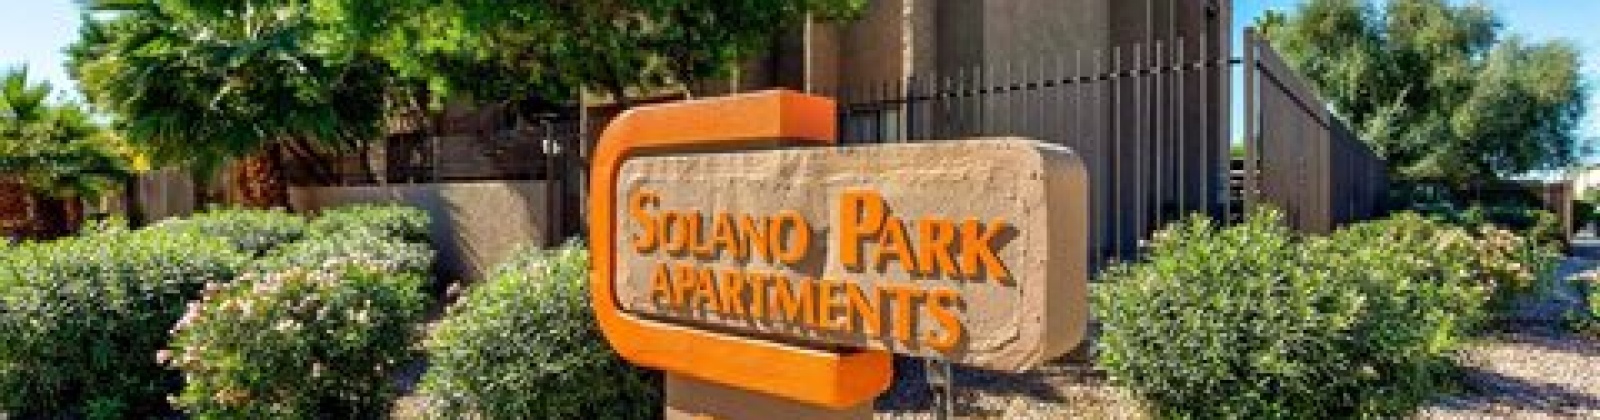 5350 N 17th, Arizona, ,Apartment,Multi-Family,Solano Park,N 17th,1054